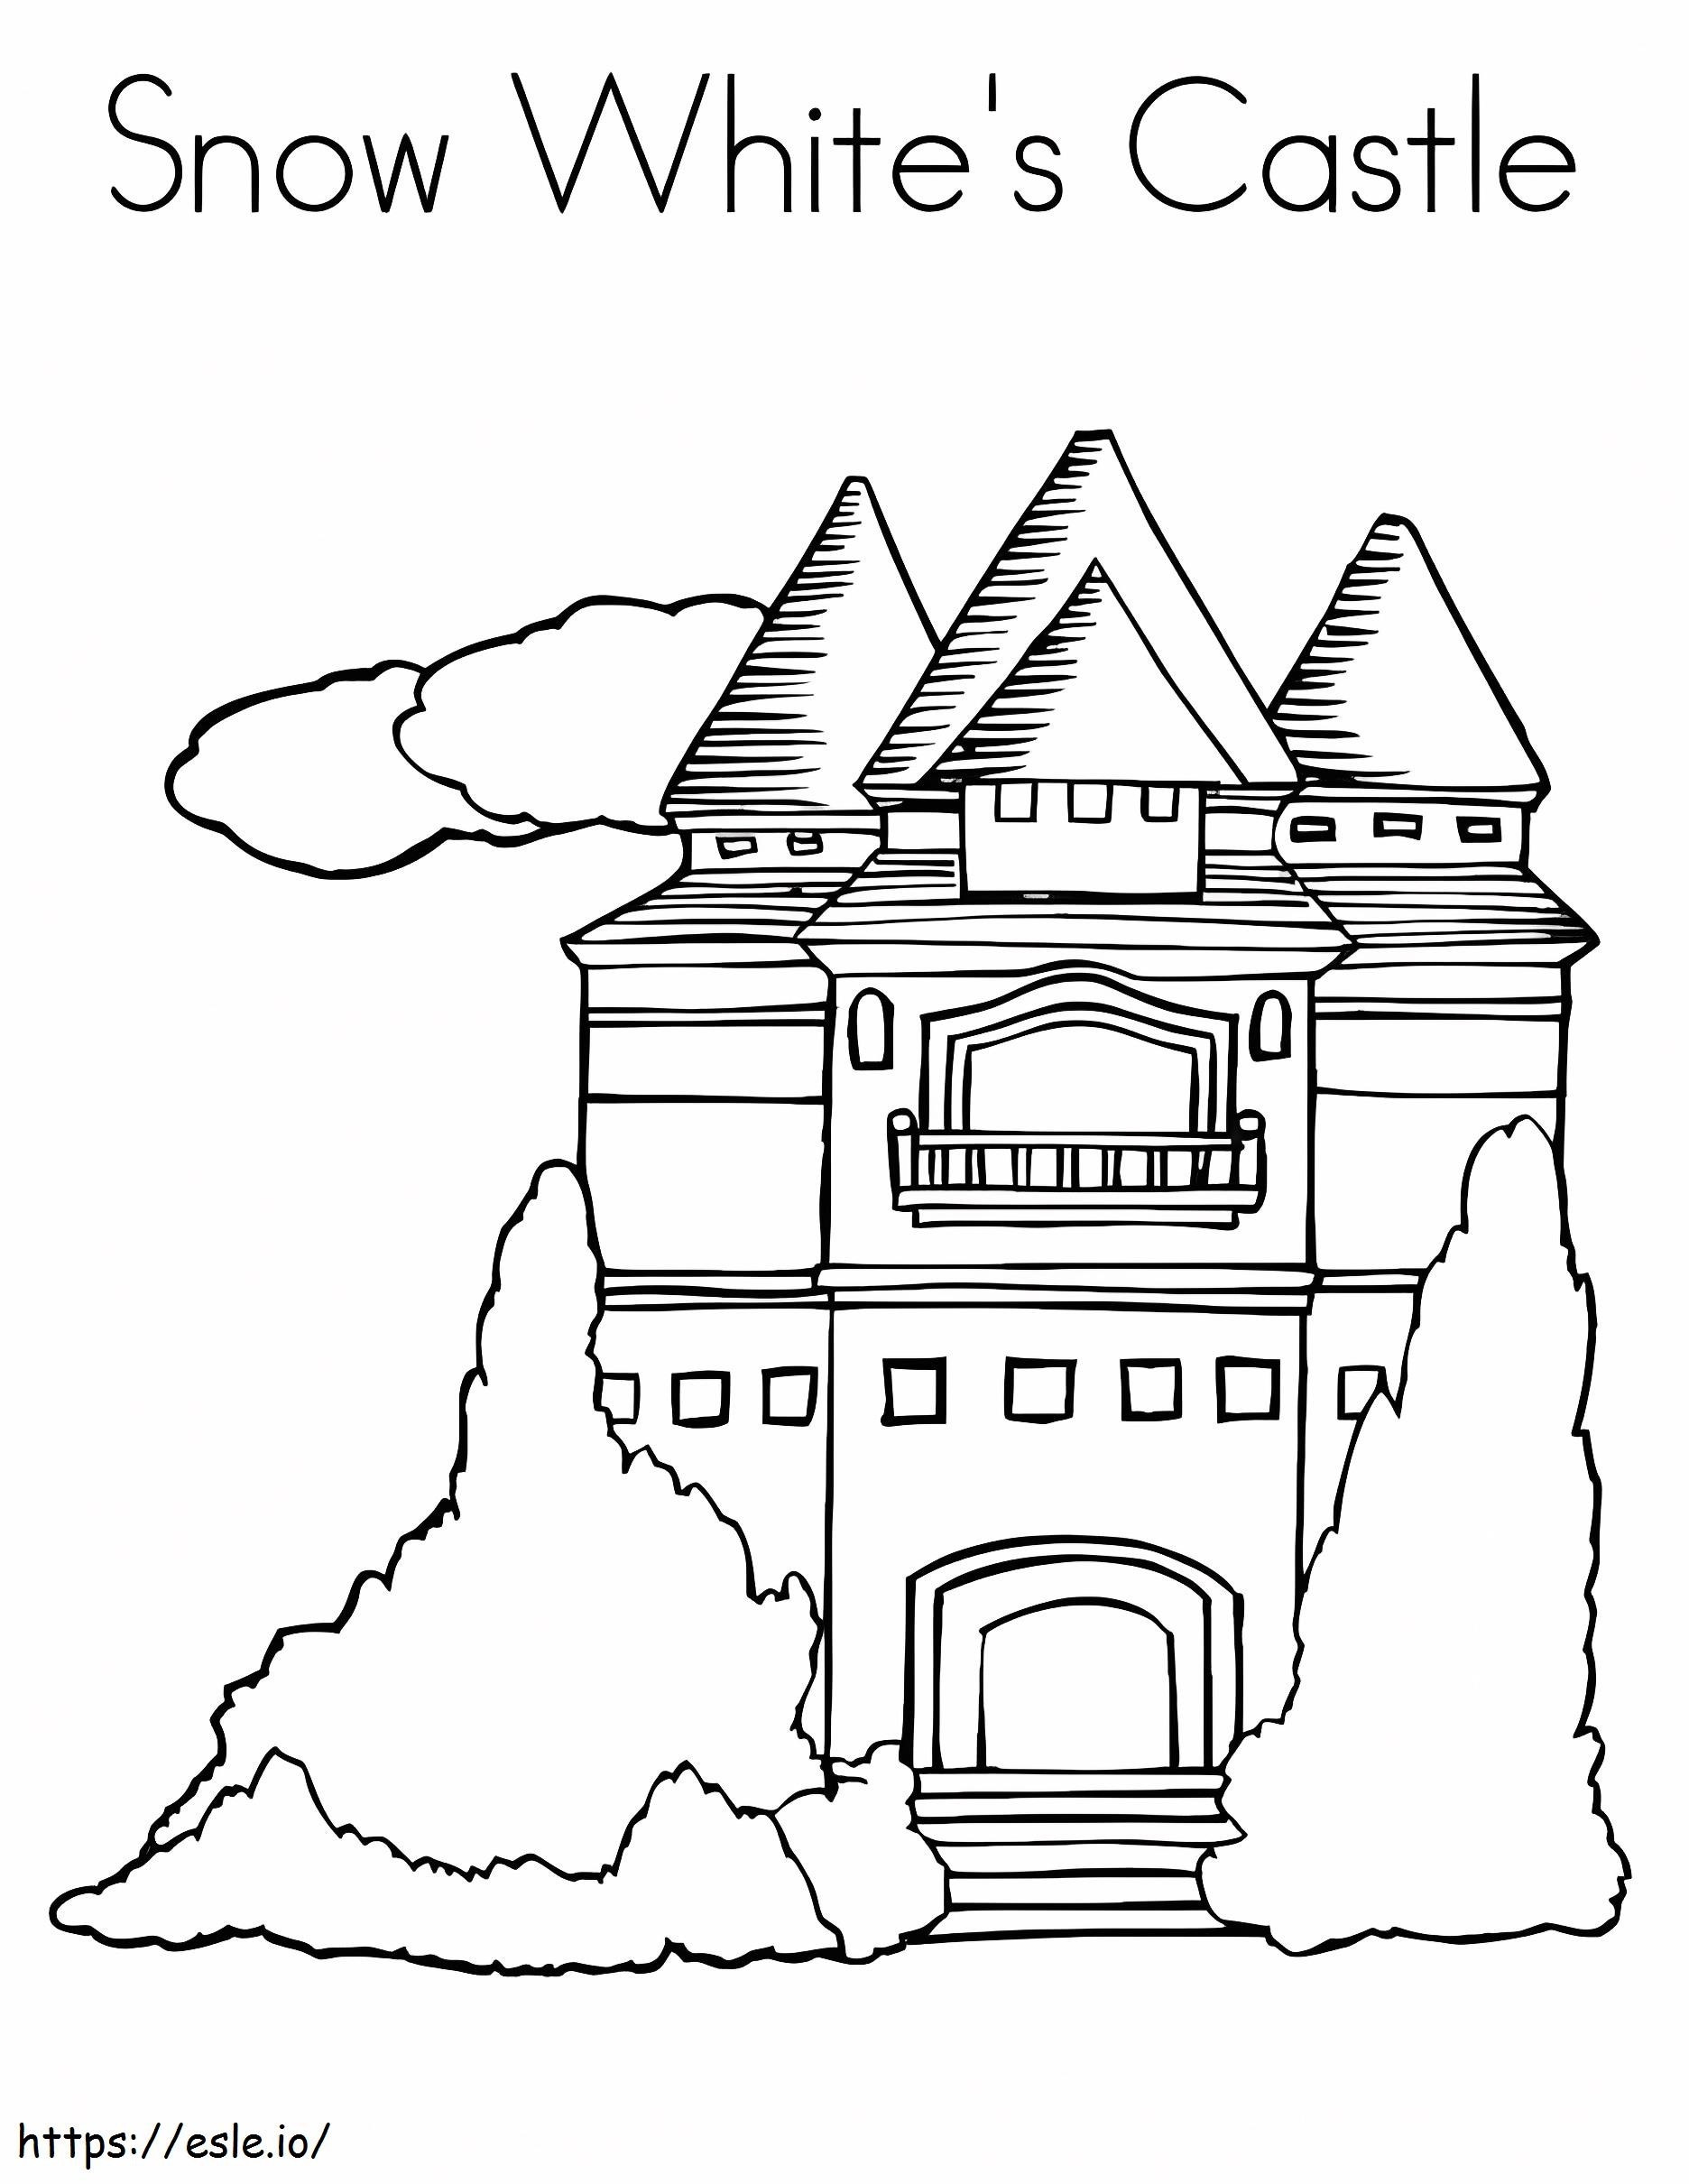 Snow White Castle coloring page